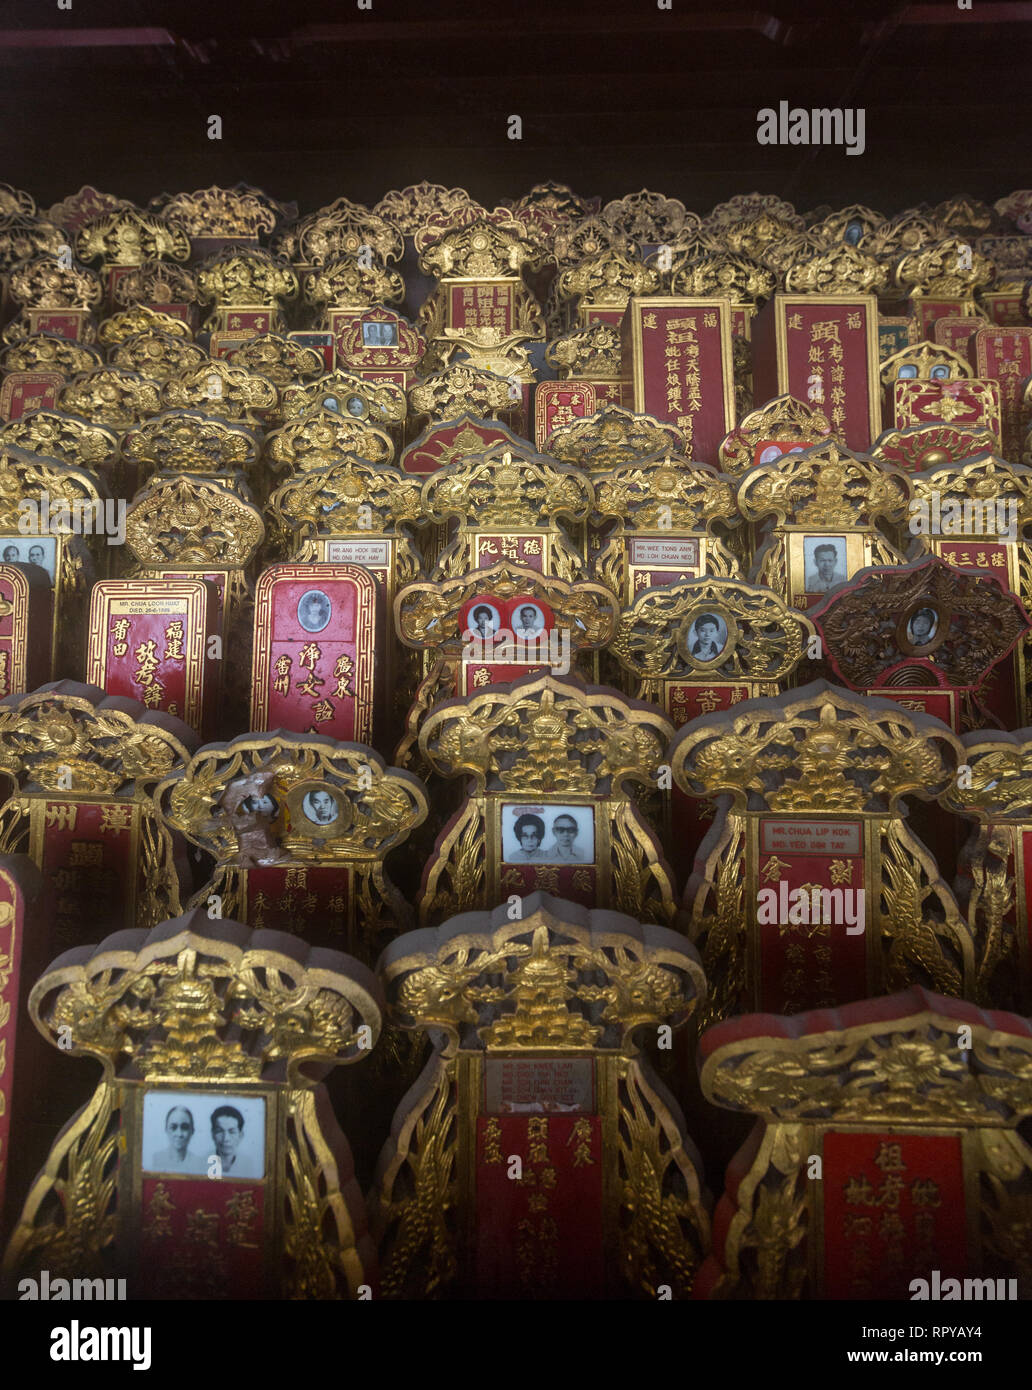 Tablettes ancestrales, Siang Lin Voir Temple Bouddhiste, Melaka, Malaisie. Banque D'Images